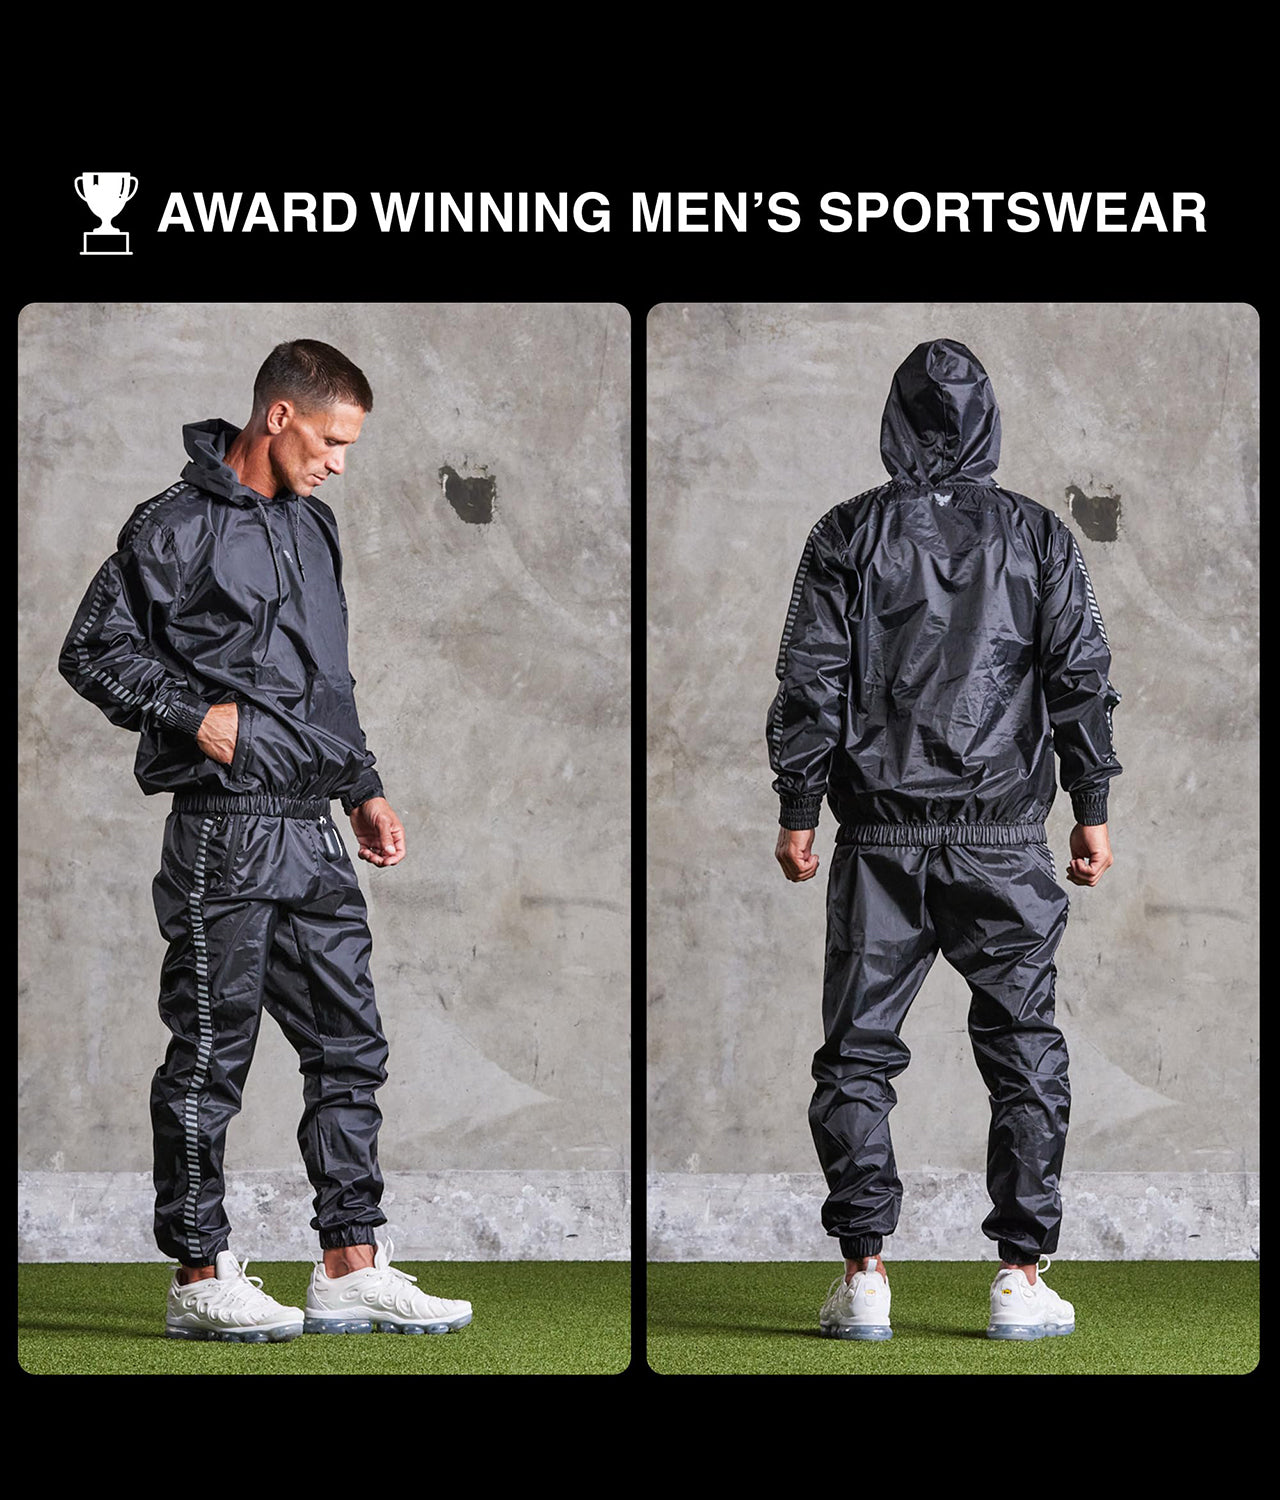 Elite Sports Essential Sauna Suit for Men & Women Weight Loss Award Winning Sportswear